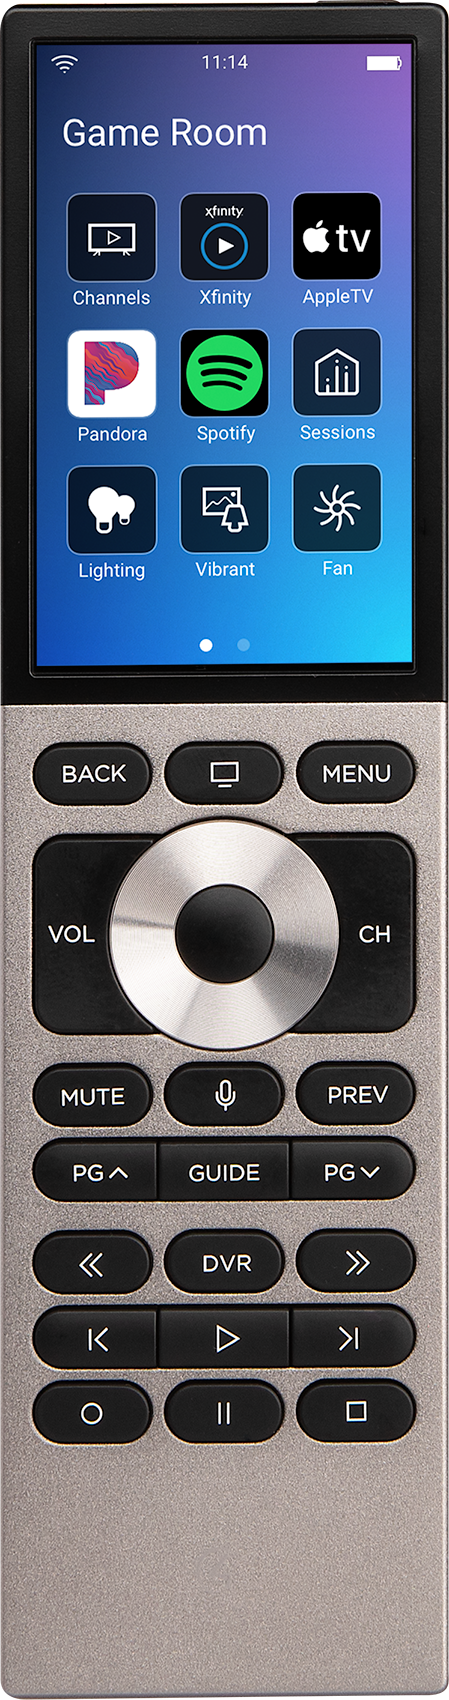 Control4® Halo Touch Remote